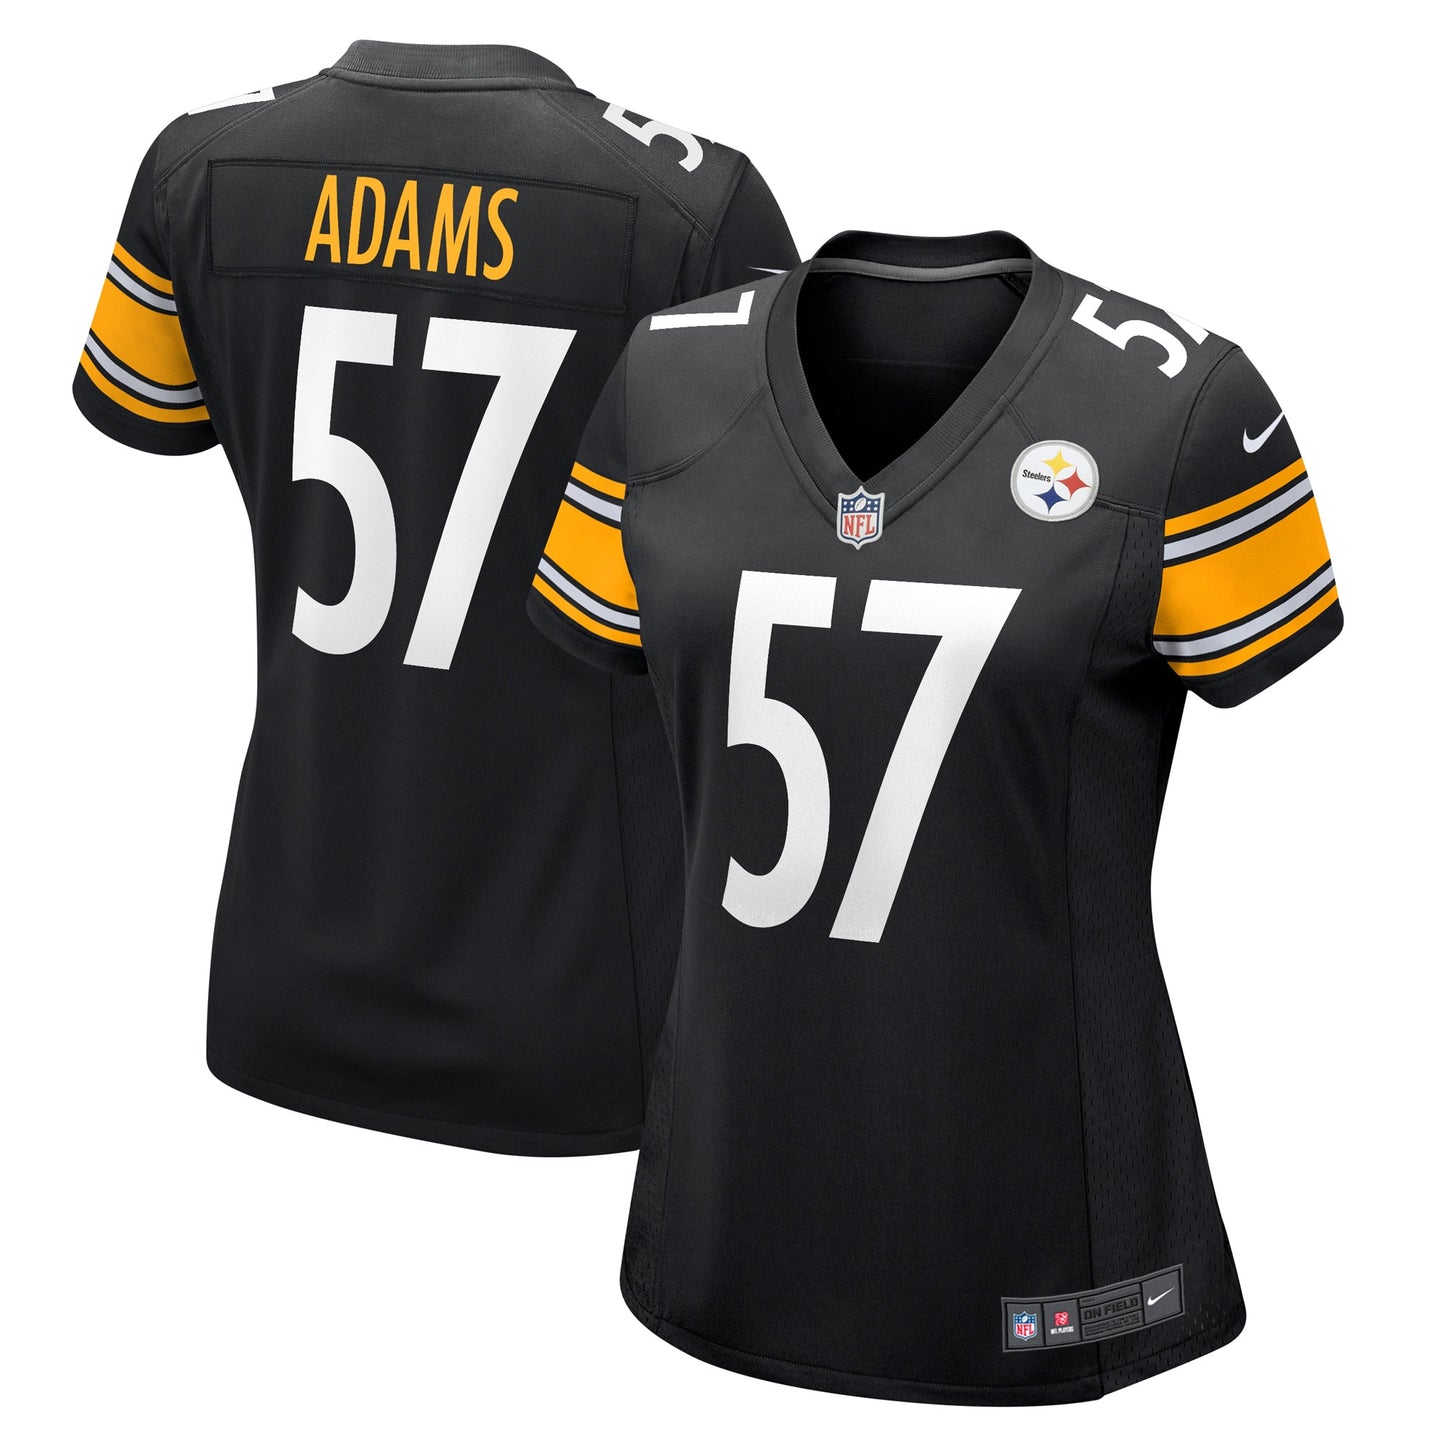 Montravius Adams Pittsburgh Steelers Nike Women's Game Player Jersey - Black